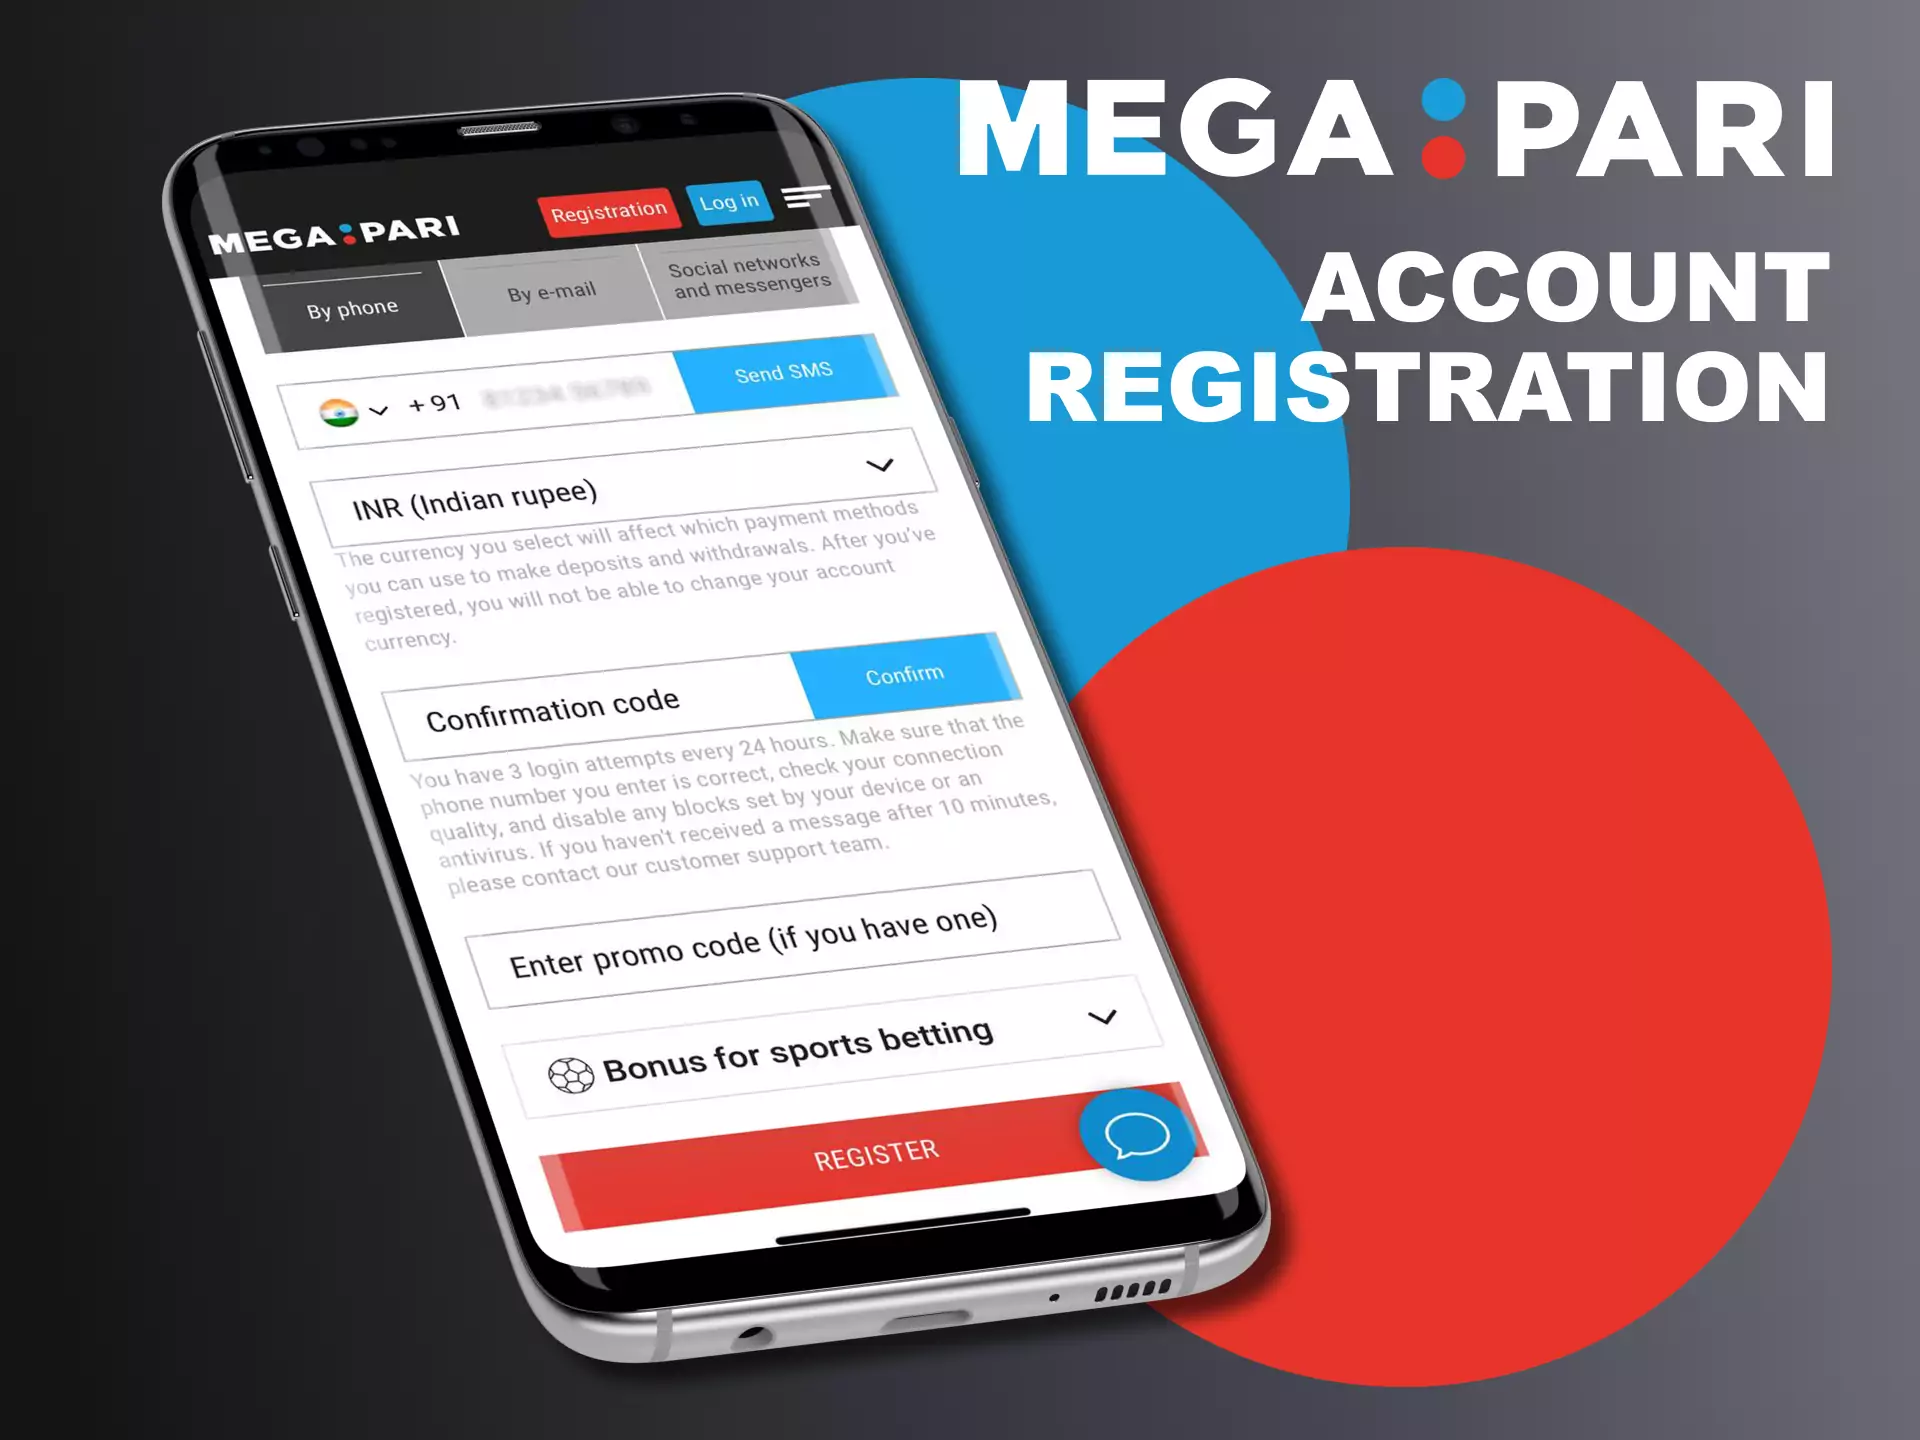 Complete a simple registration on the Megapari app.